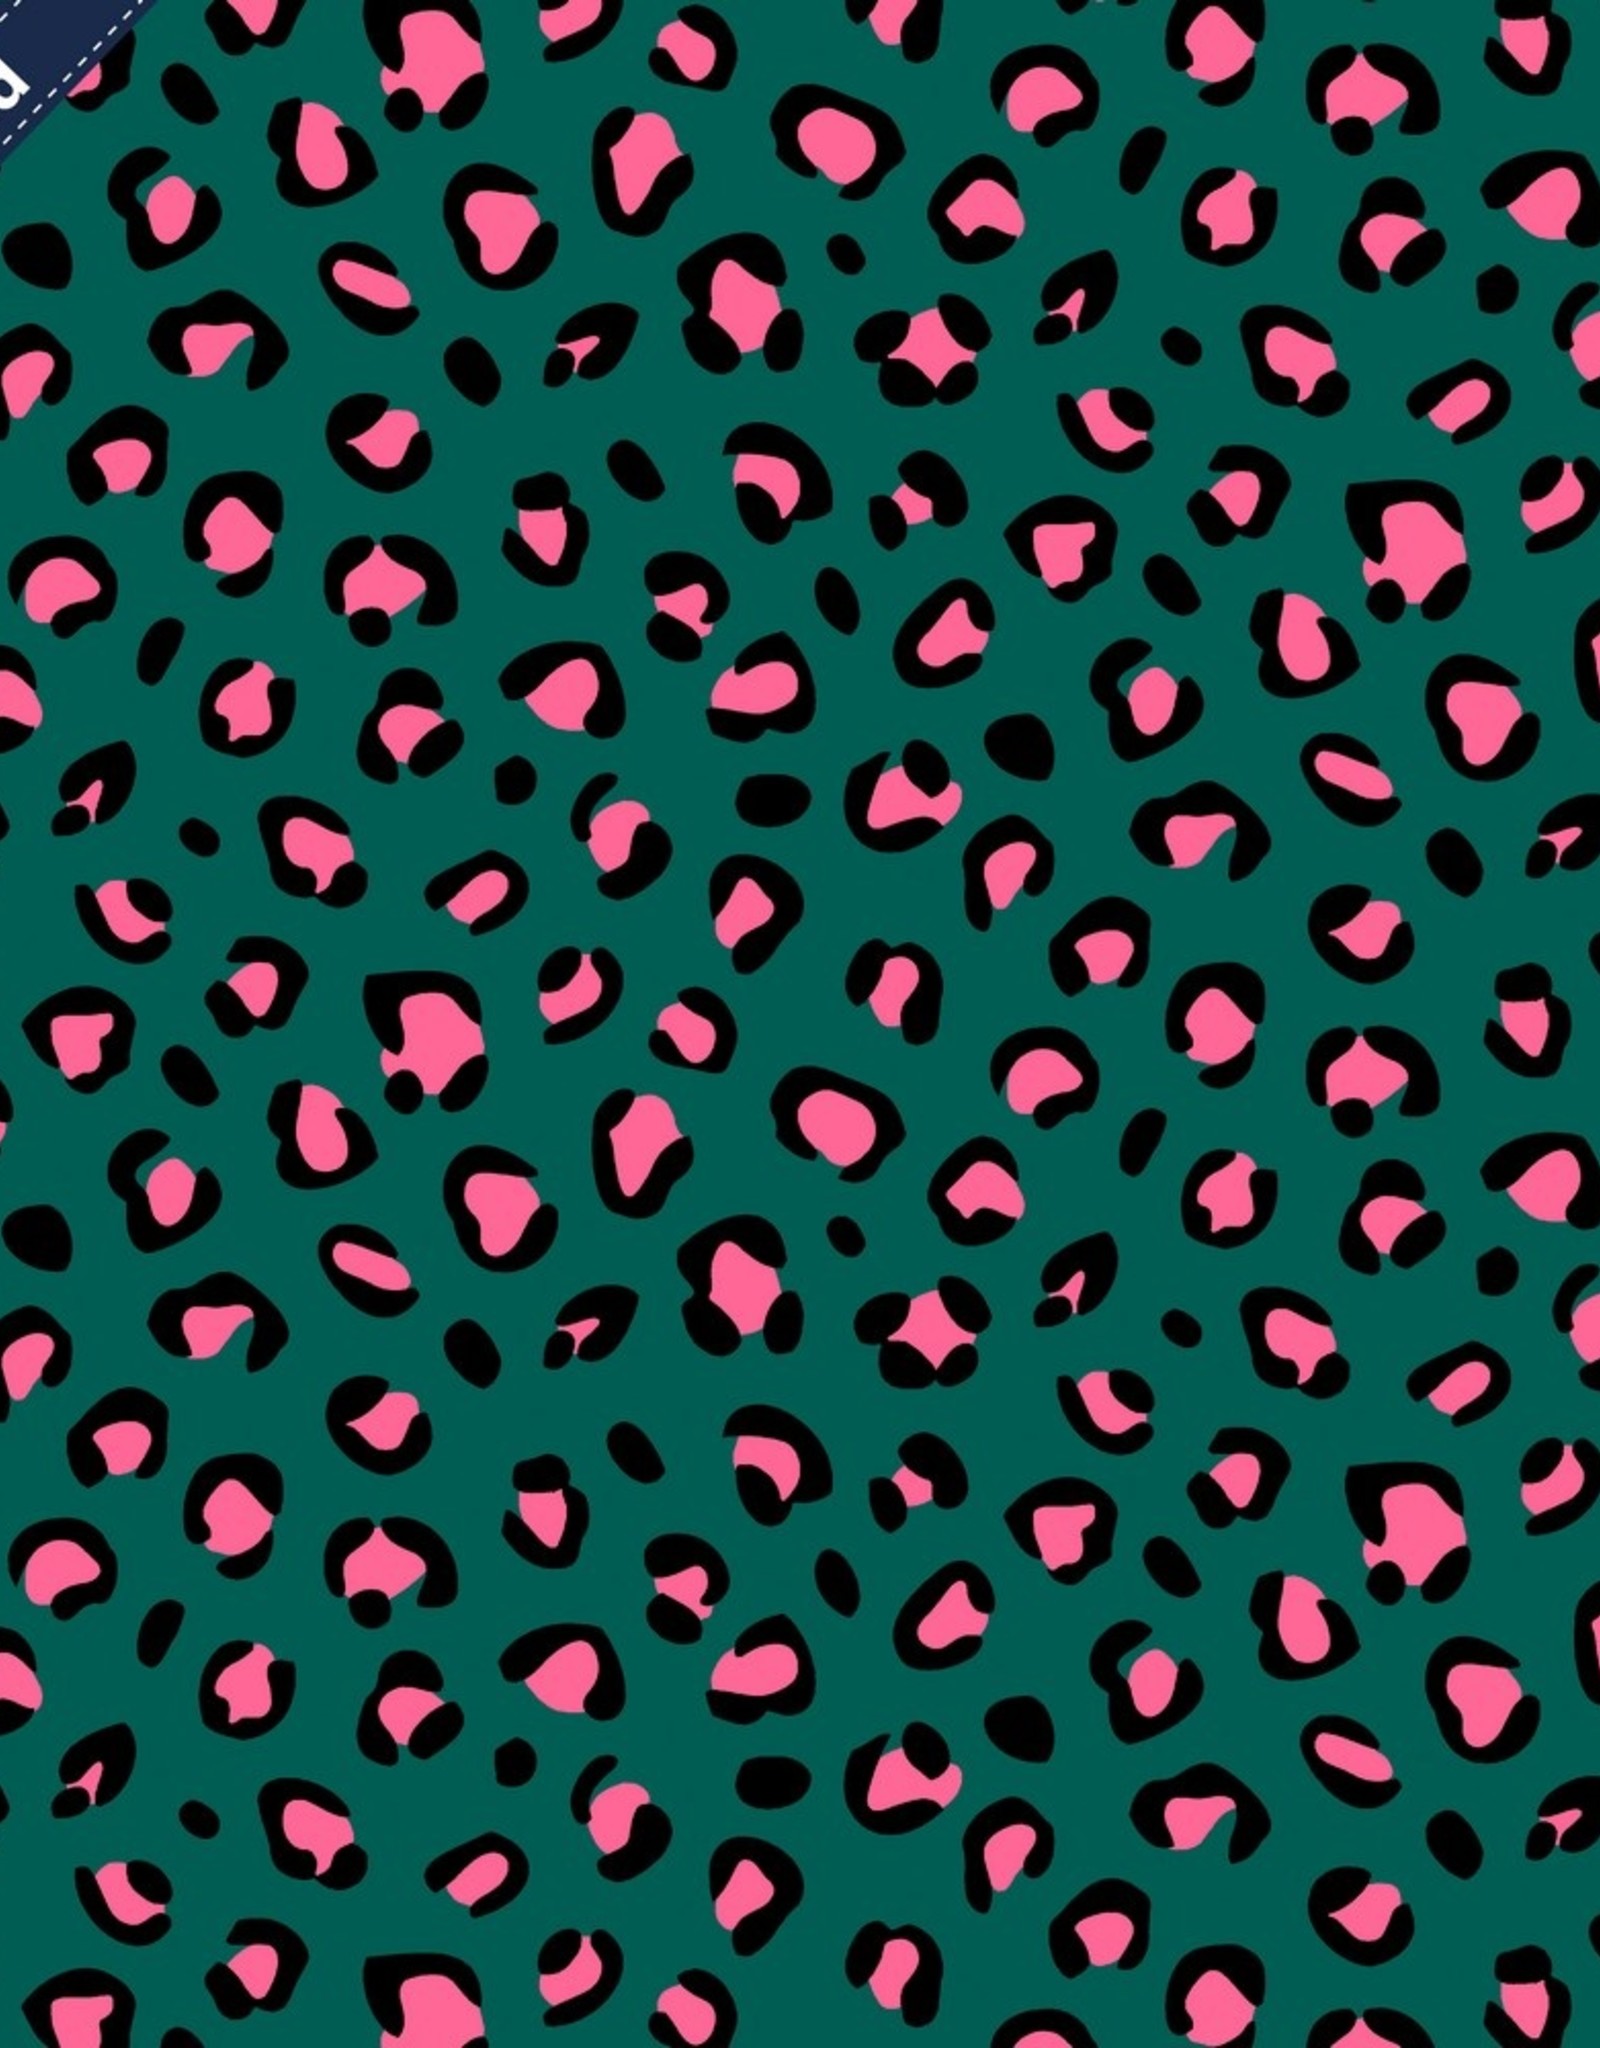 Poppy Gecoat katoen Animal Skin green dots